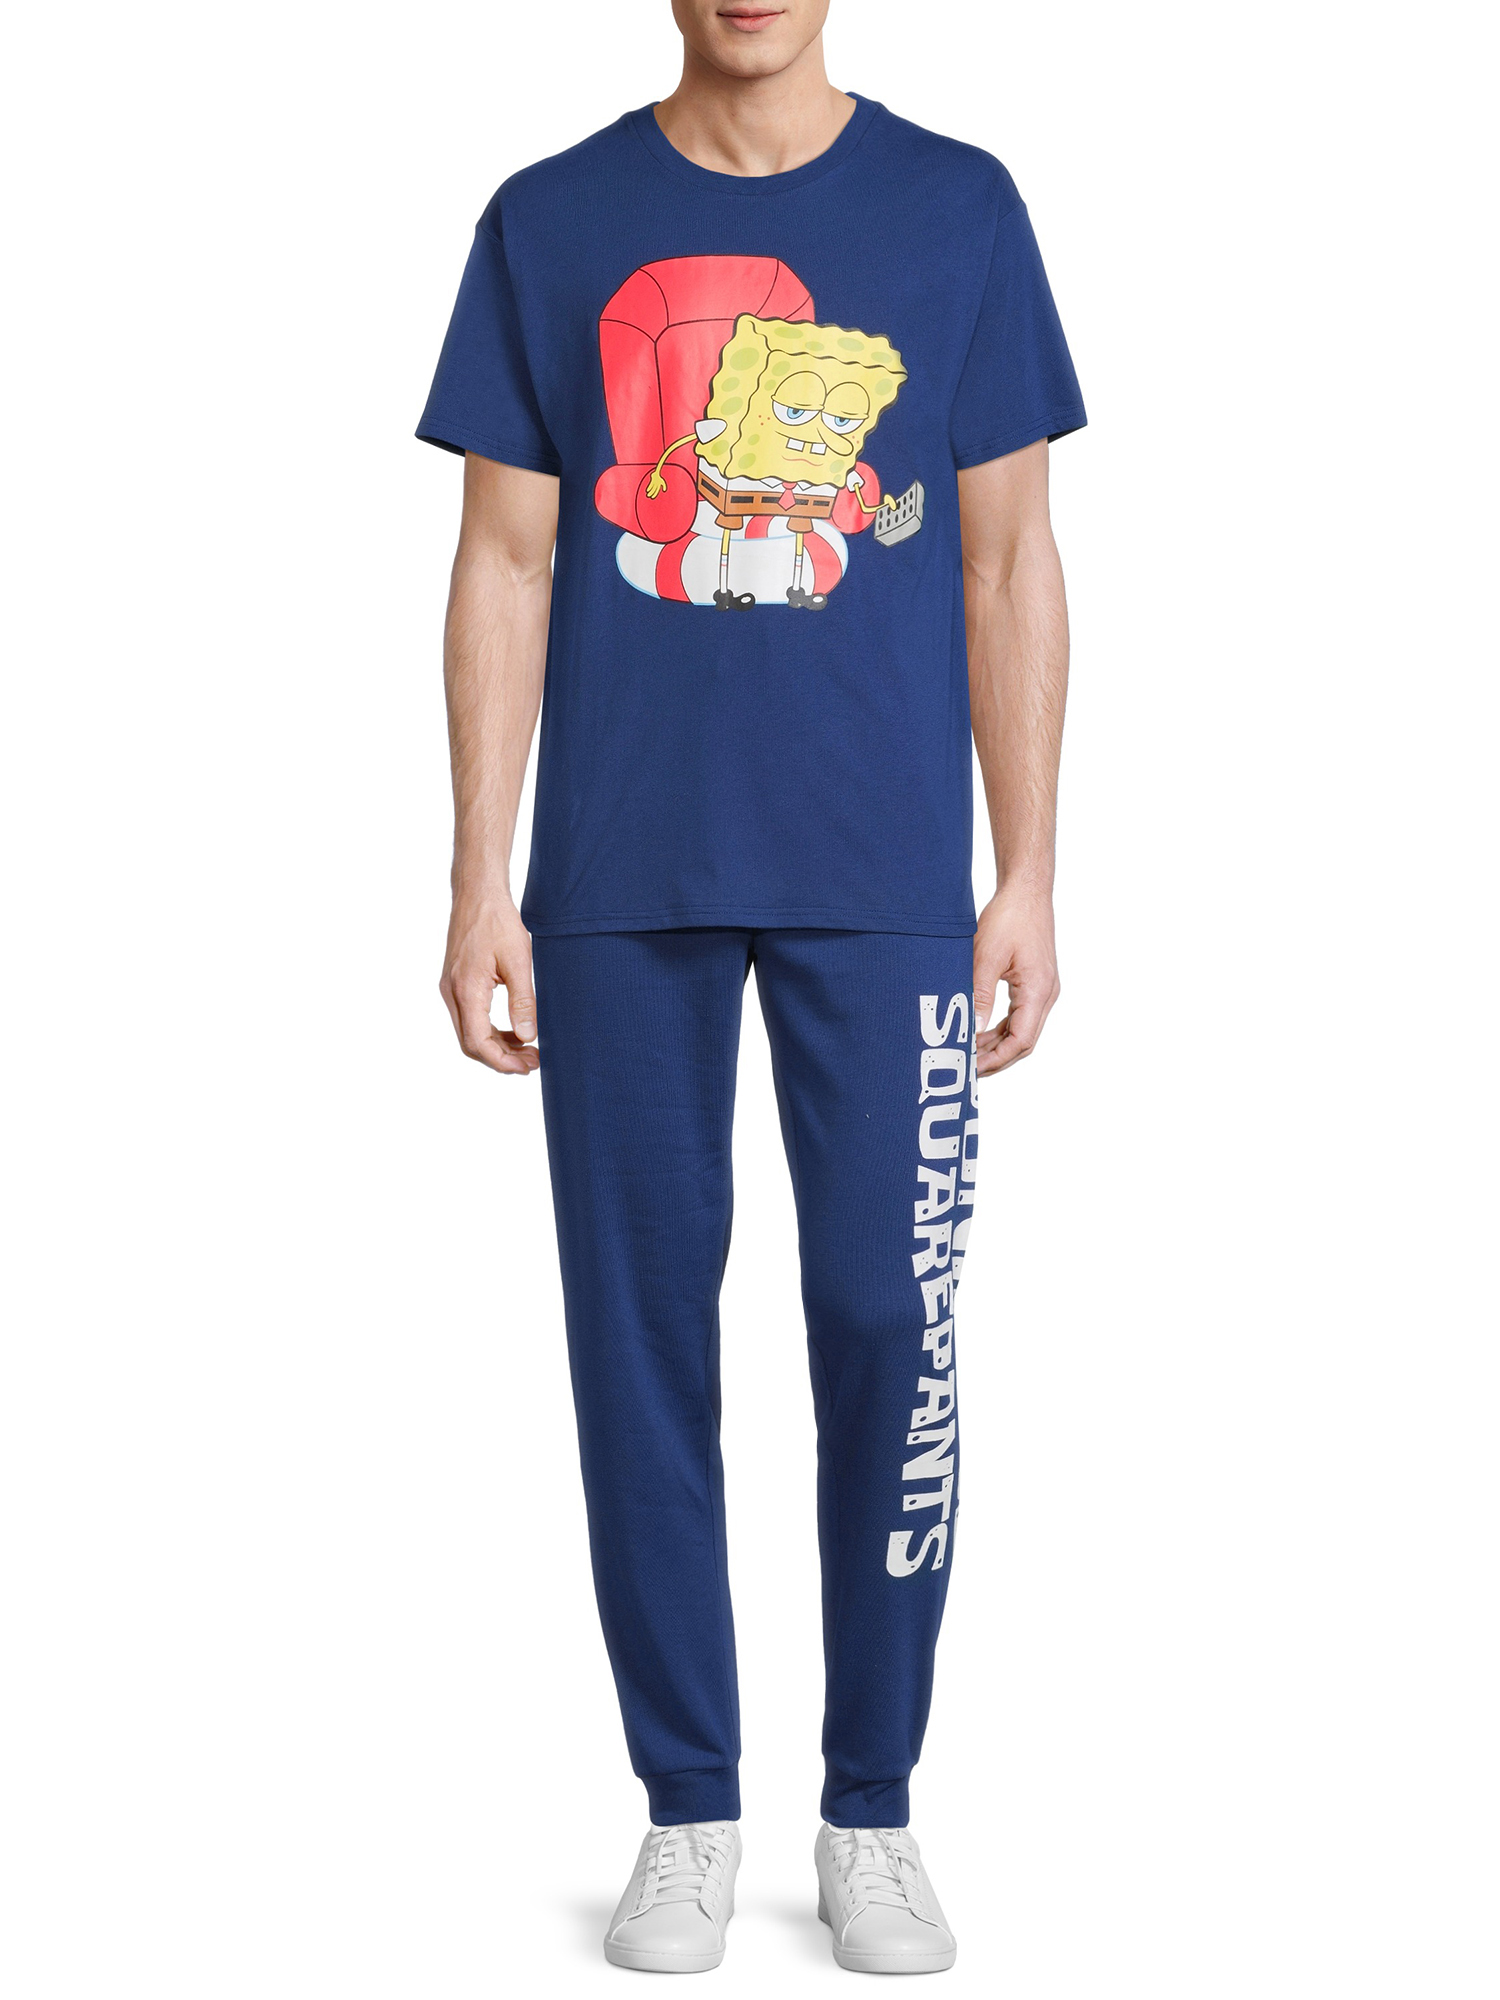 SpongeBob SquarePants Men's & Big Men's Short Sleeve Graphic T-Shirt & Jogger Sweatpants, 2-Piece Set, Sizes S-2X Men's Space Jam Graphic Tee & Sweatpants - image 1 of 5